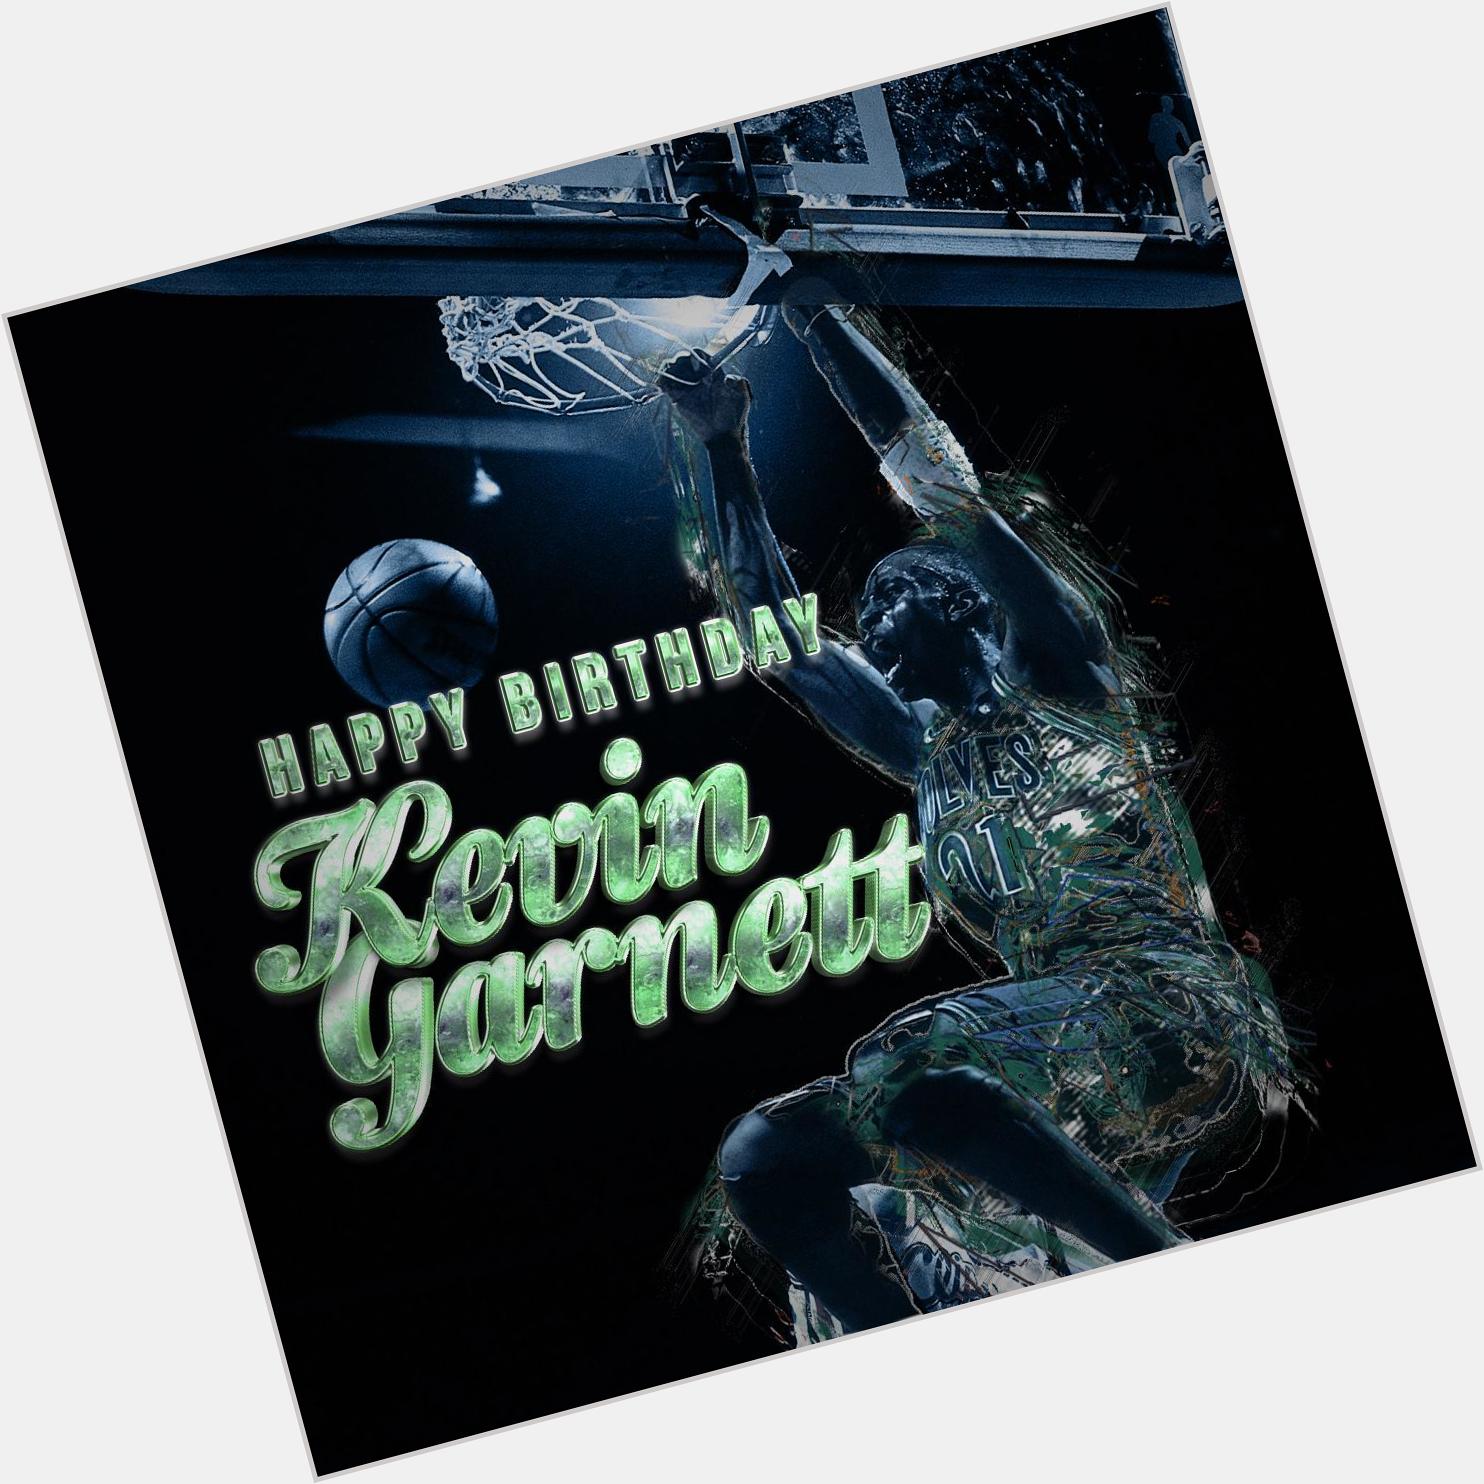 Happy Birthday to 15-time All-Star Kevin Garnett!  